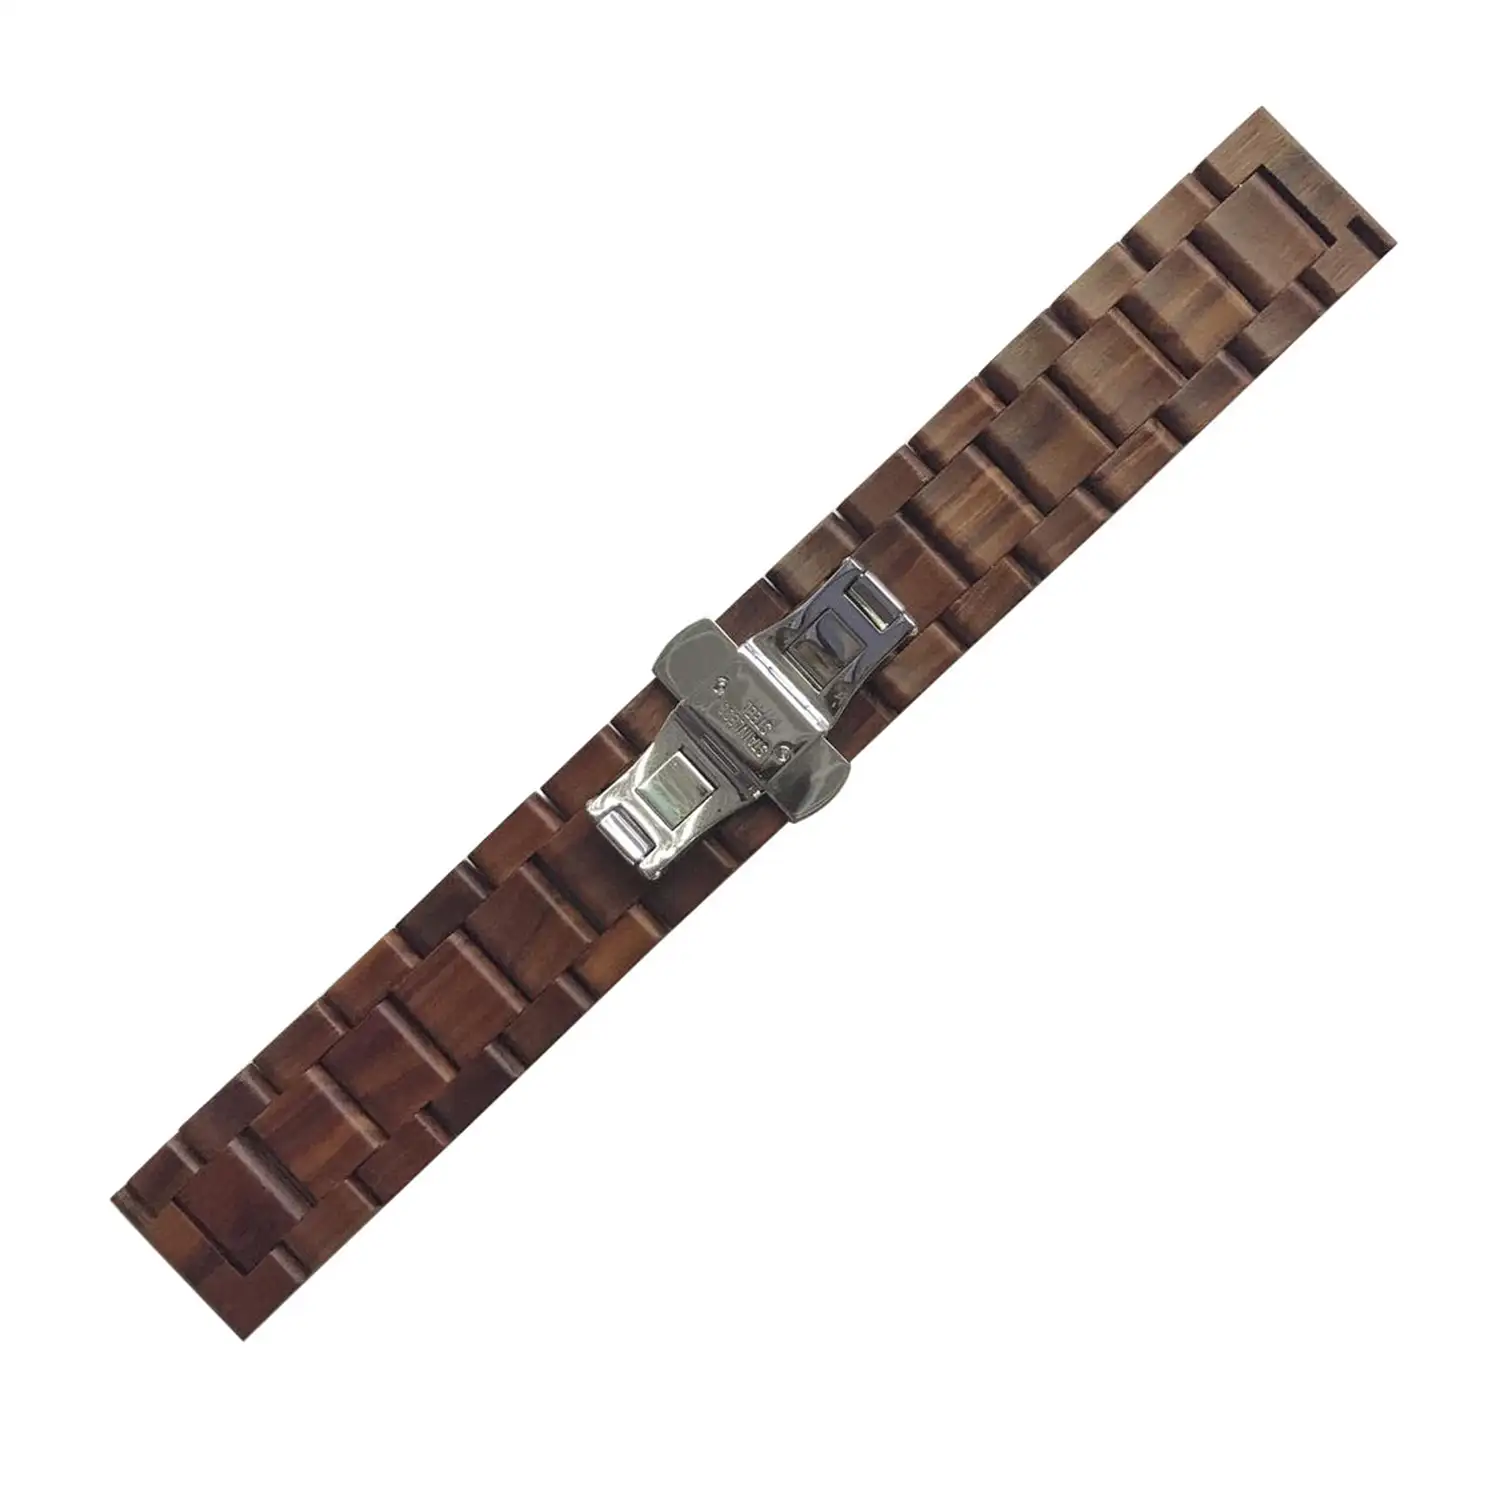 Correa universal de madera natural bambú para relojes de 20mm.Sistema Quick Release de fácil cambio.